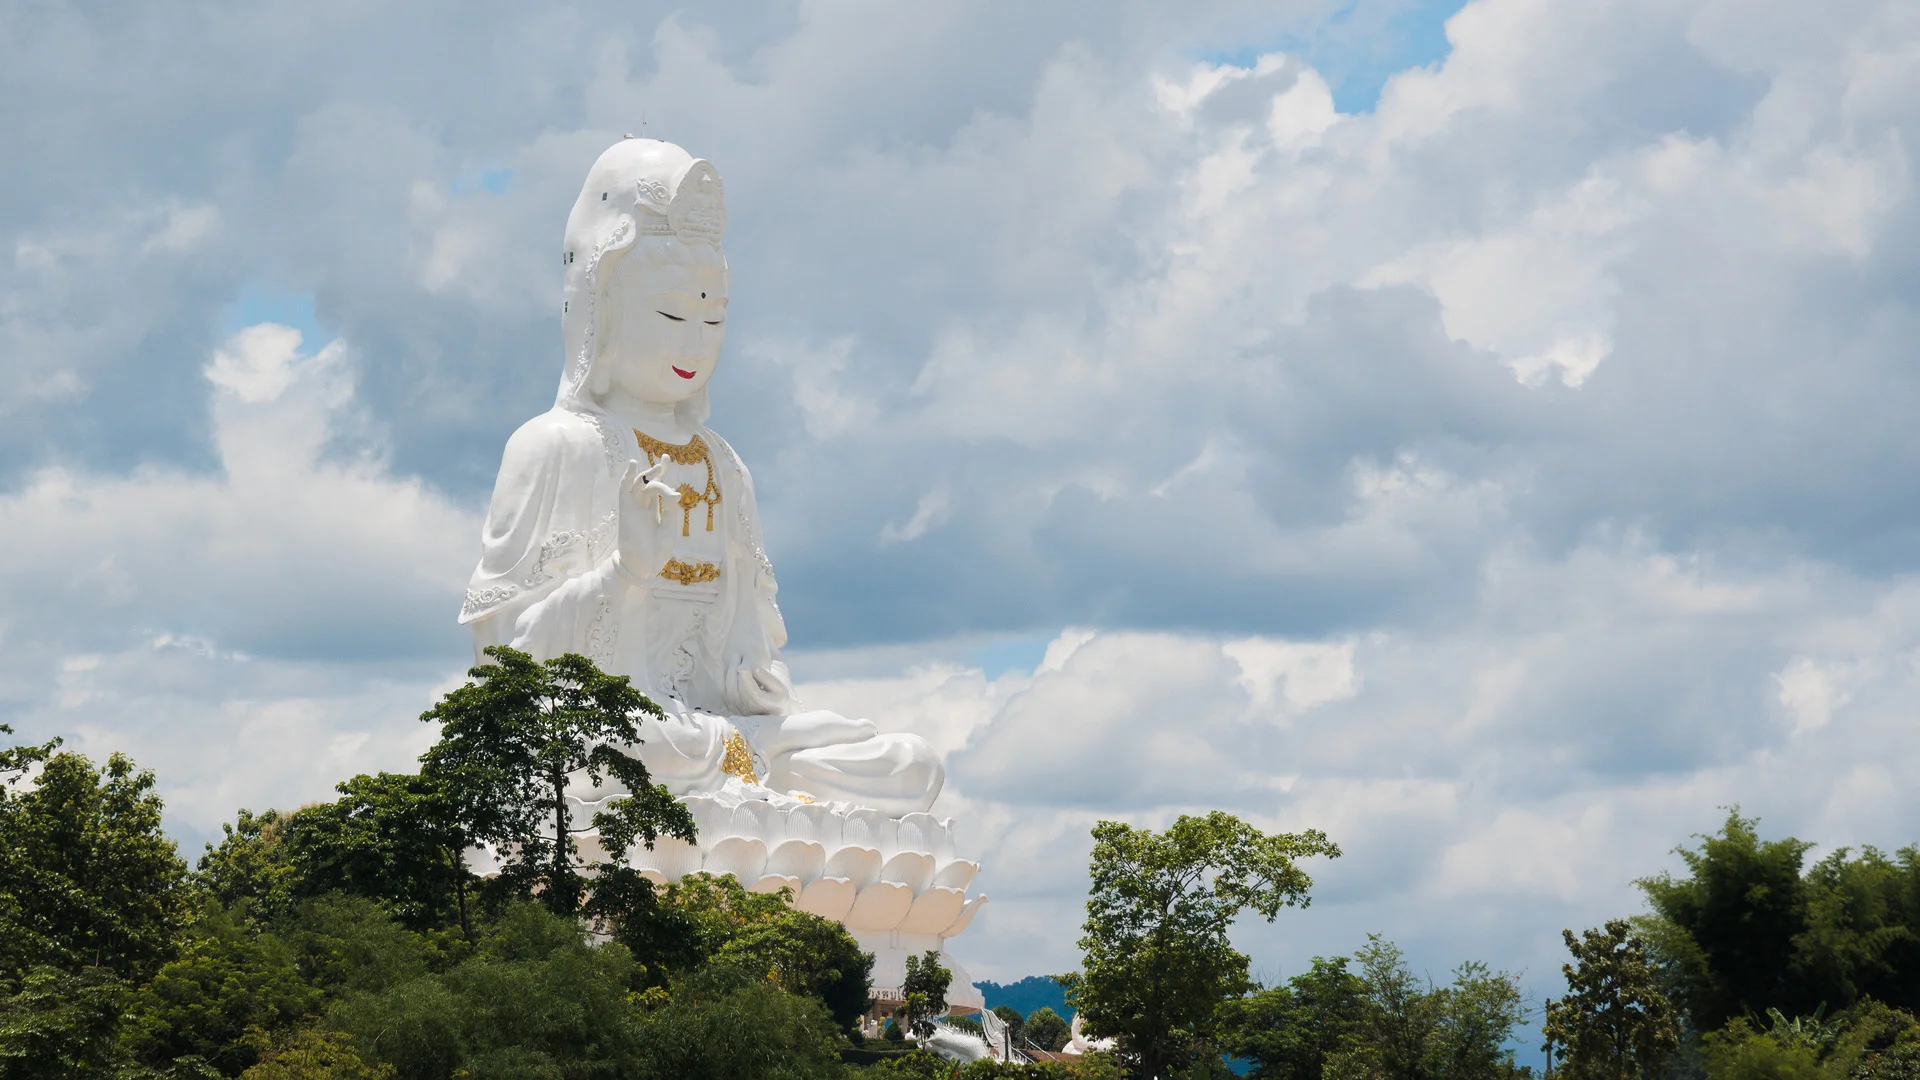 The gigantic Kuan In Statue of the Wat Huay Pla Kang in Chiang Rai, Thailand